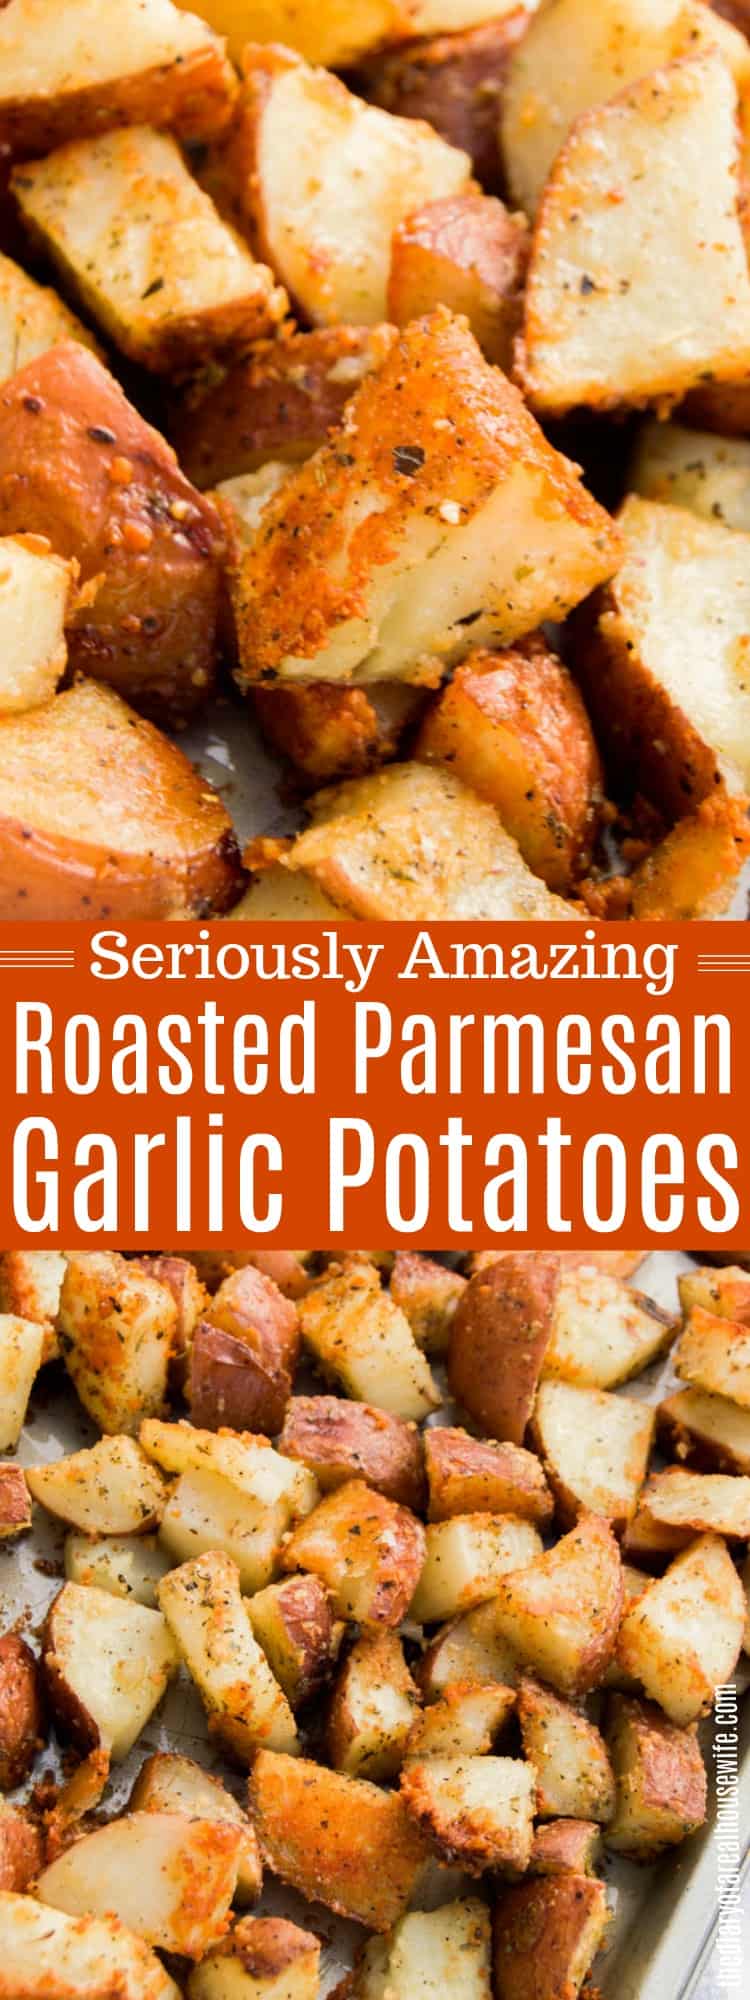 Roasted Parmesan Garlic Potatoes